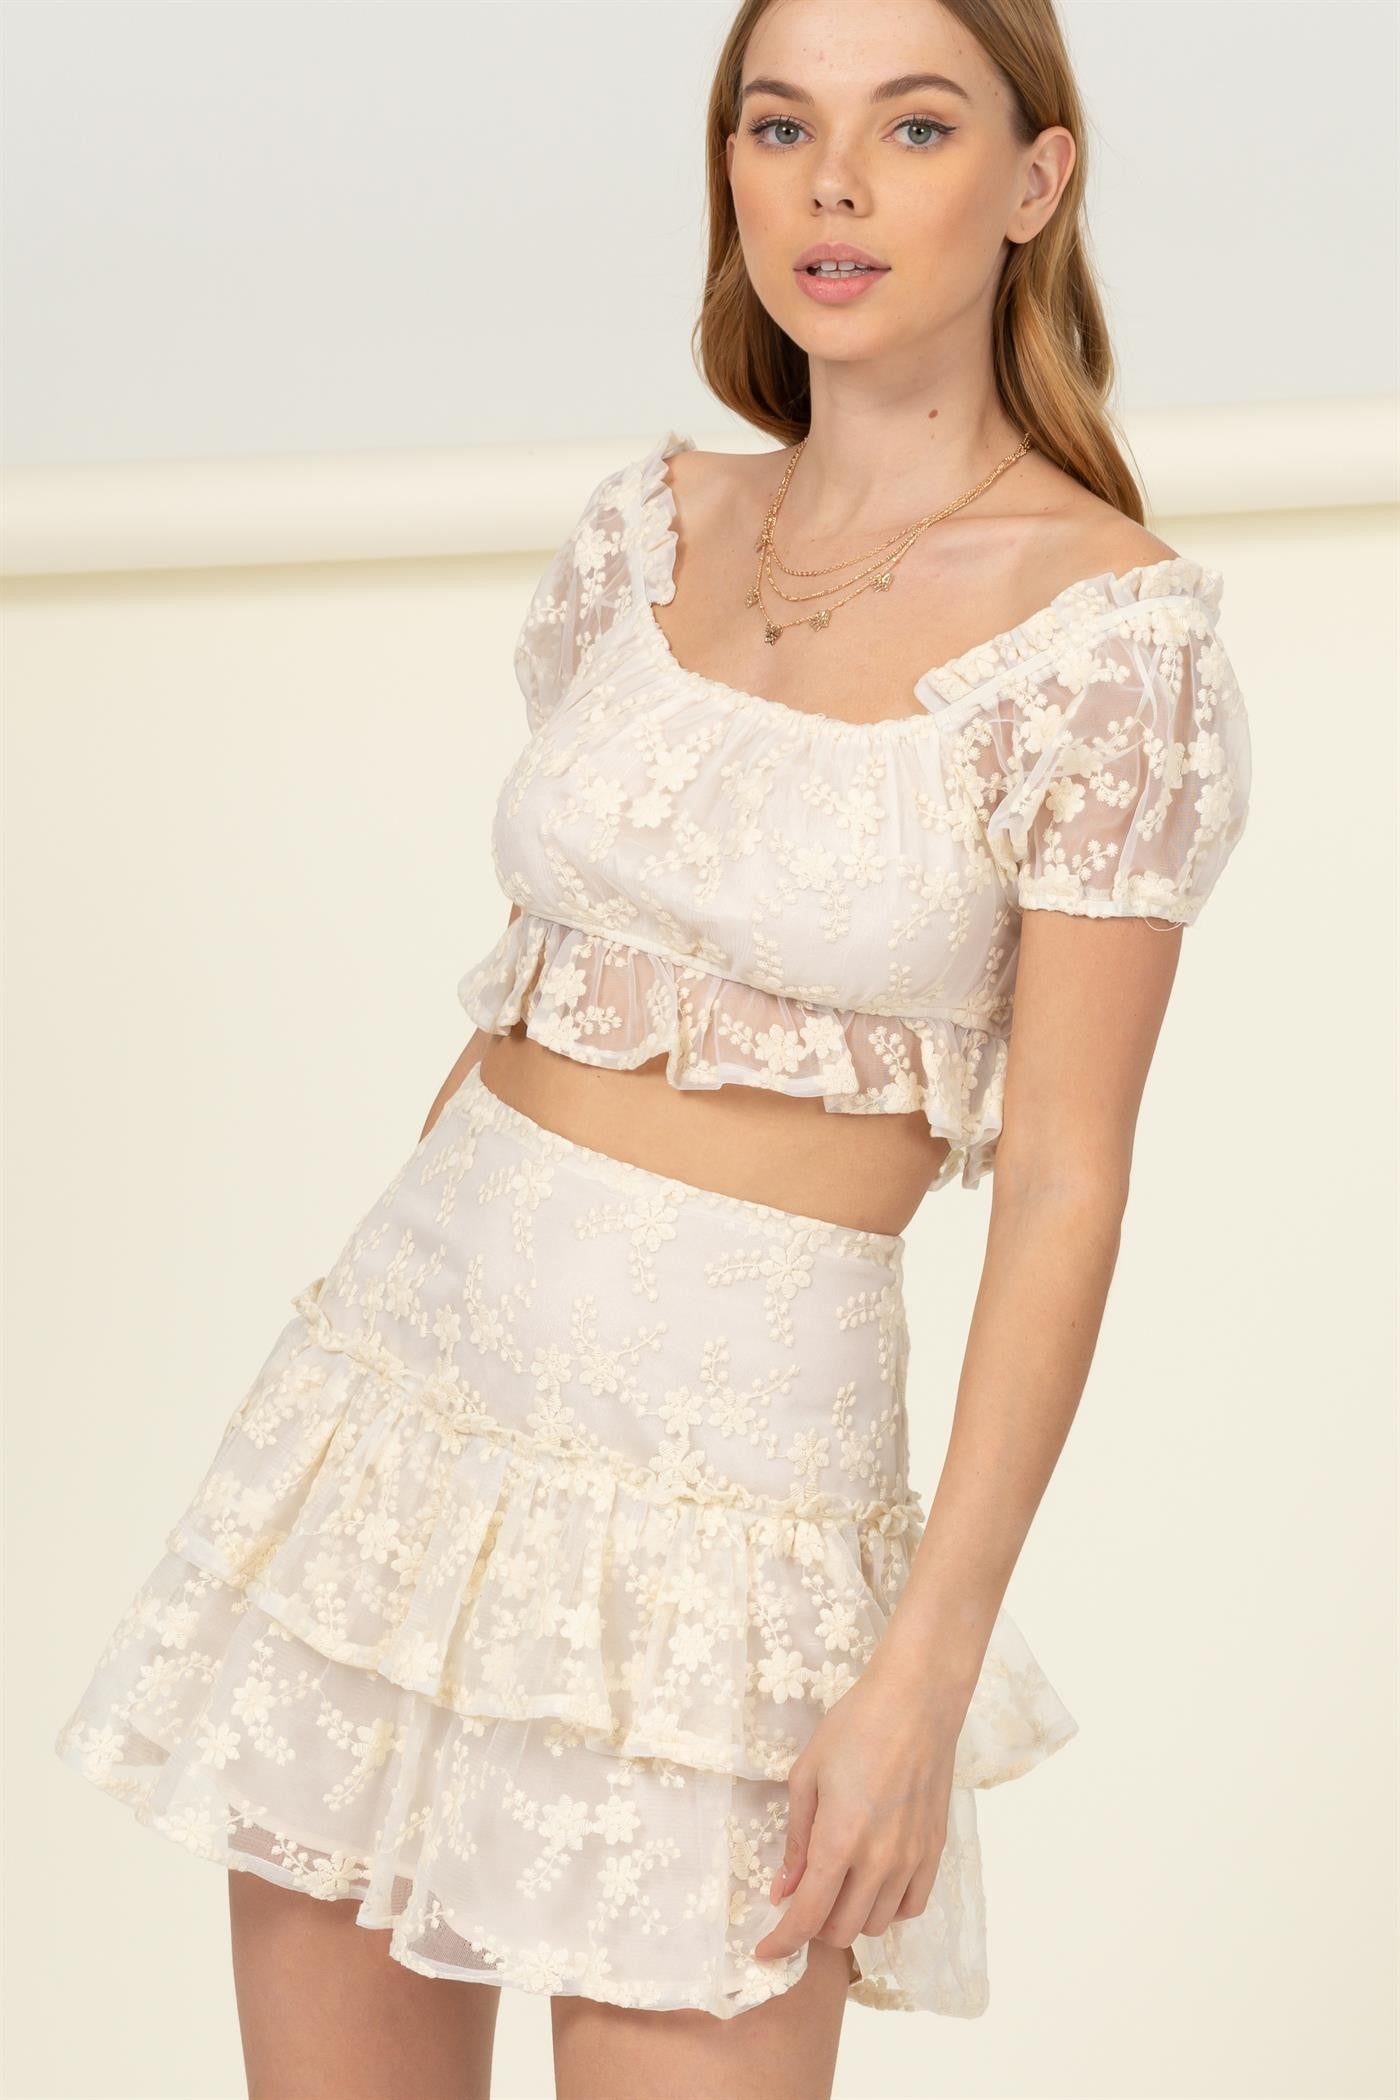 Floral Lace 2-Piece Skirt and Crop Top Set - RARA Boutique 